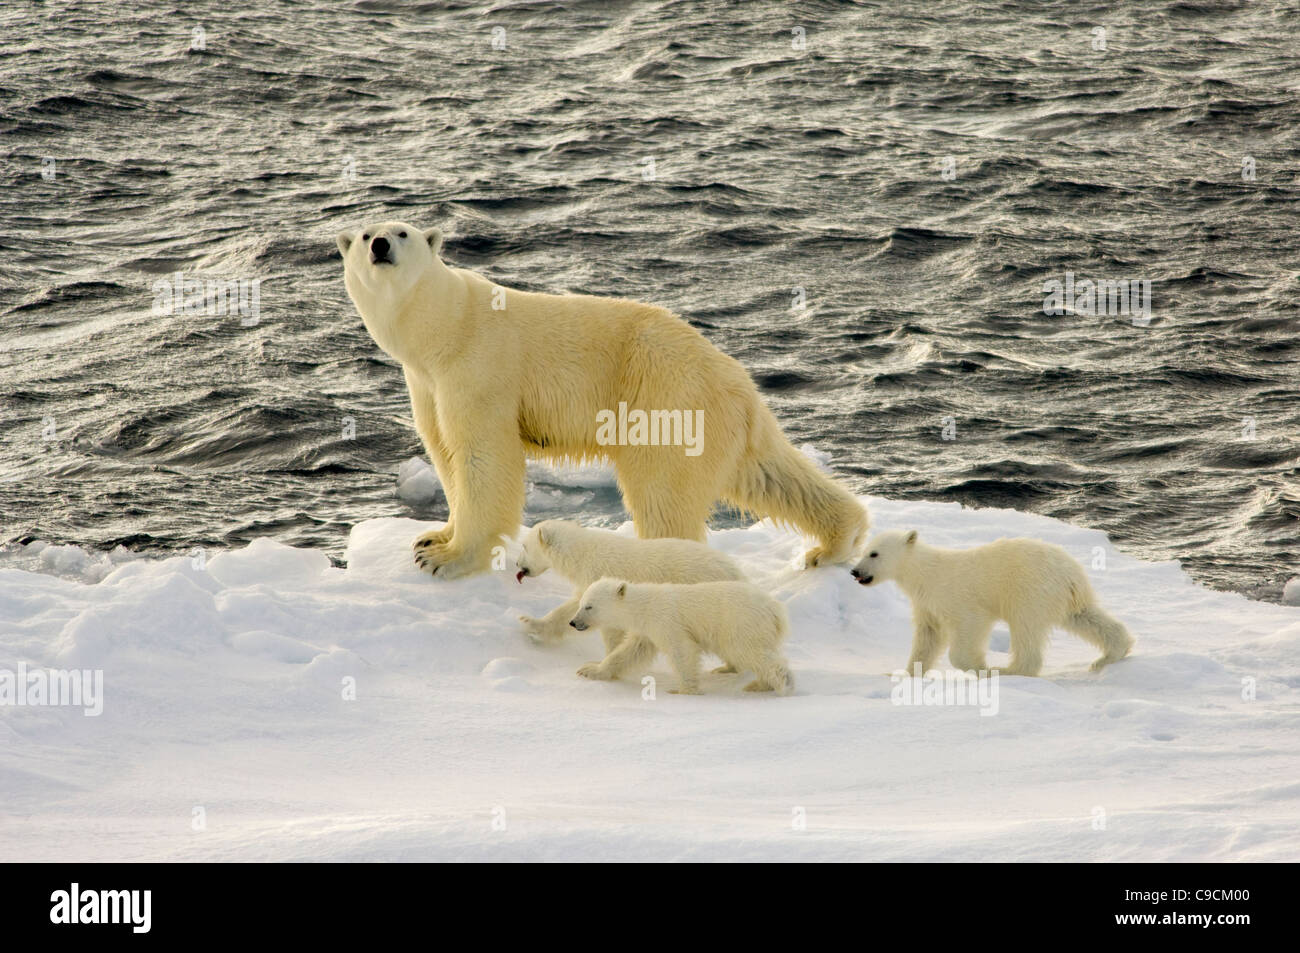 Female Polar Bear  (Ursus maritimus) with three young cubs on floating drift ice, Freemansundet (between Barentsøya and Edgeøya), Svalbard Archipelago, Norway Stock Photo